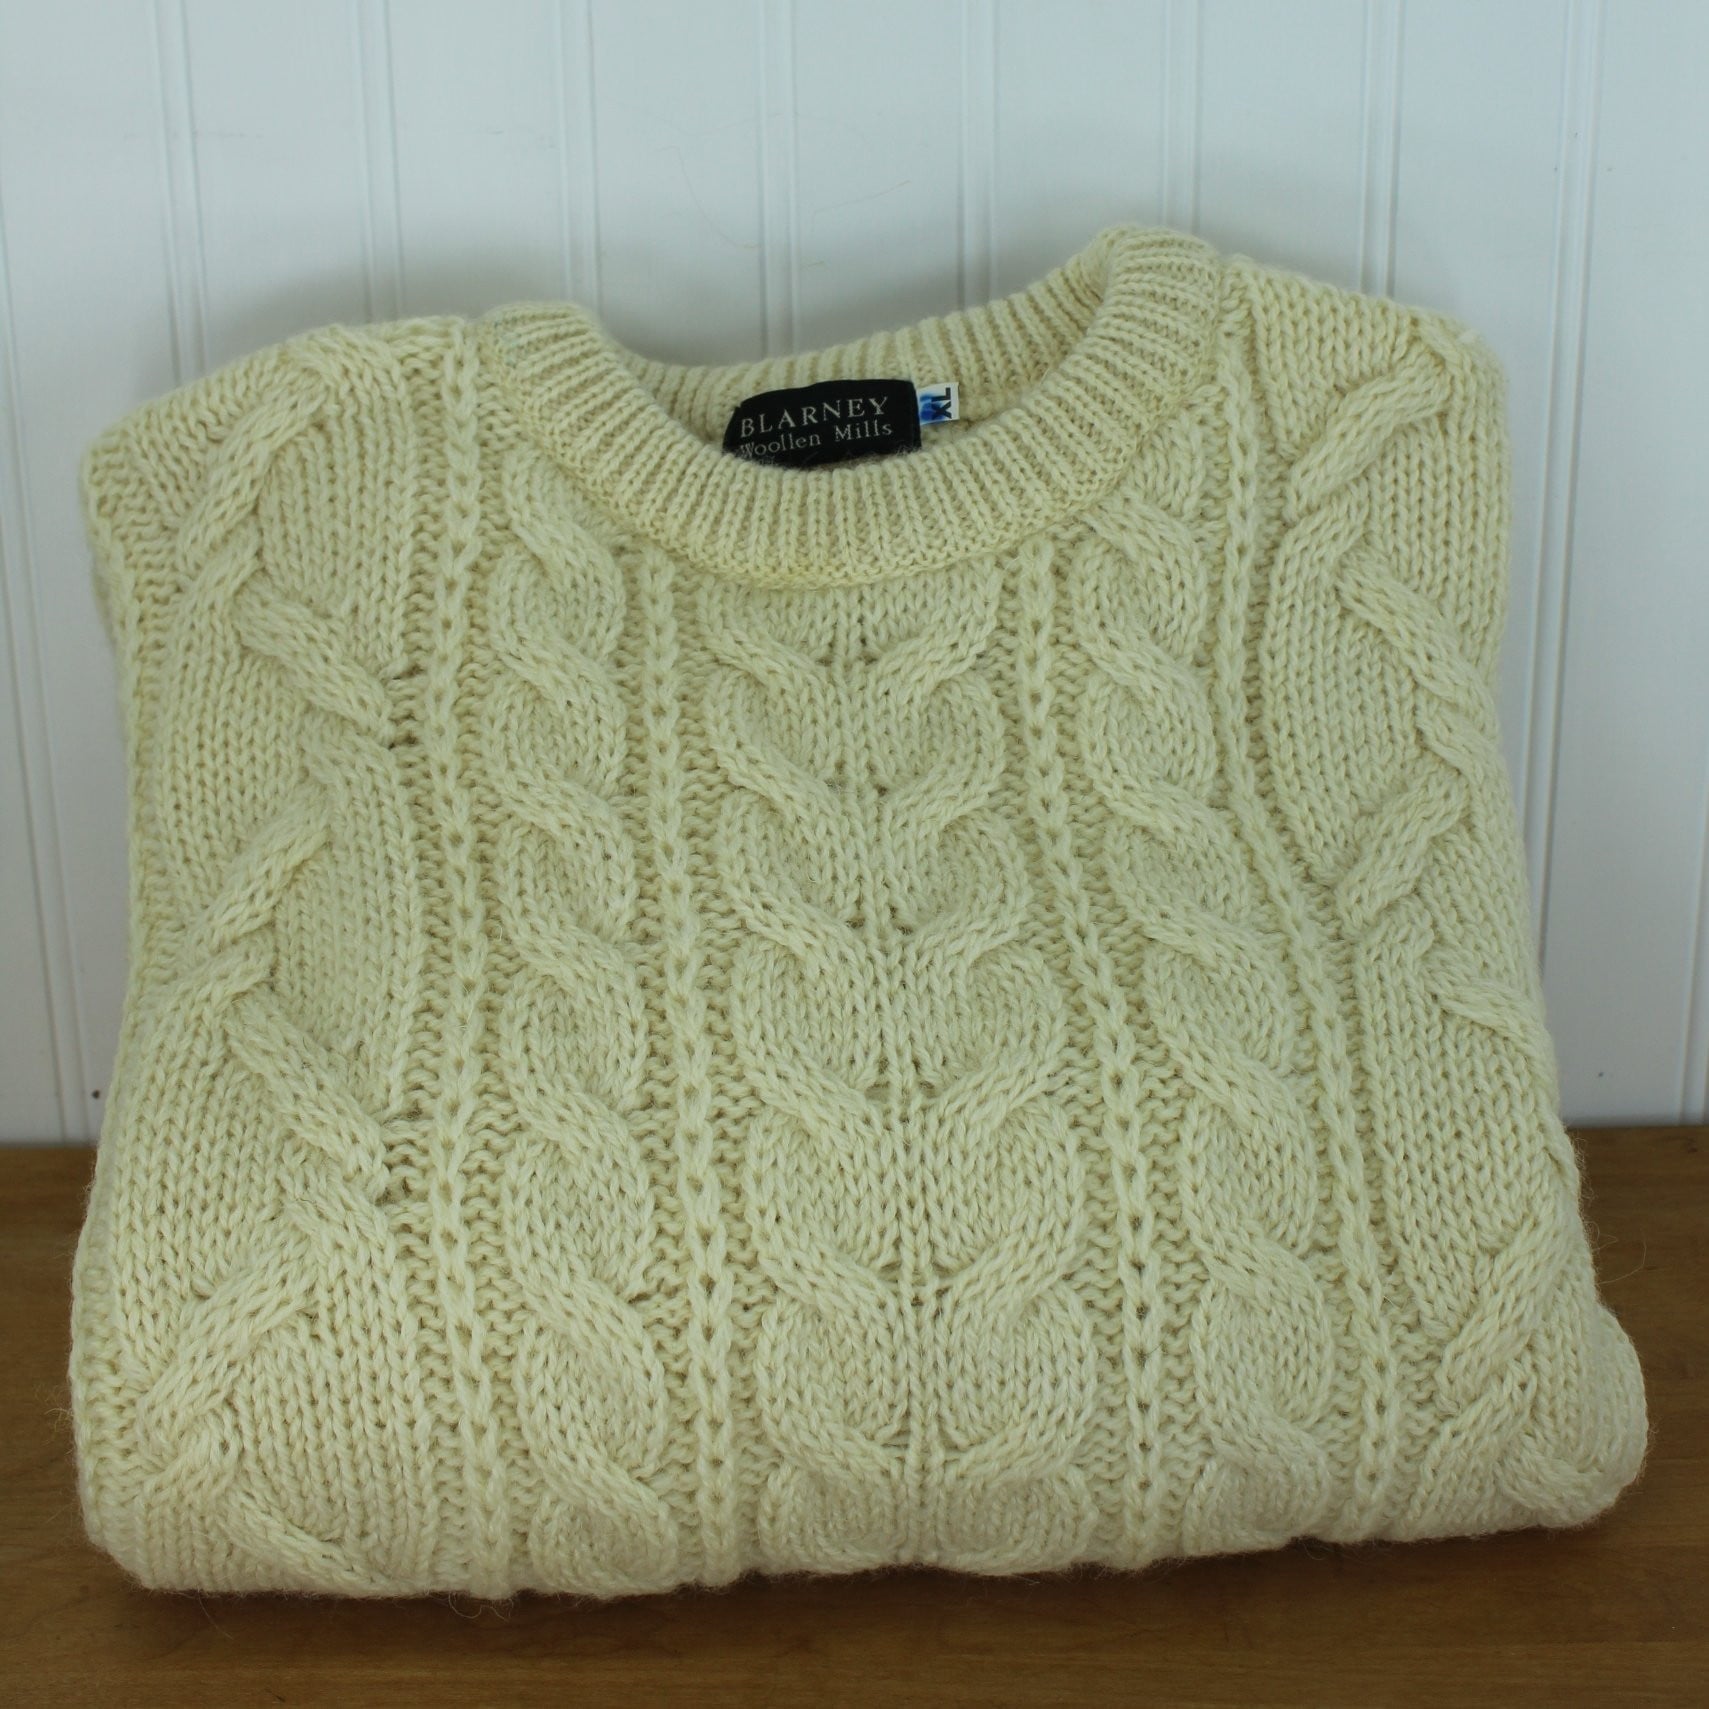 Blarney Mens Wool Pullover Sweater - Ivory Aran Style - XLarge - Ireland soft comfy